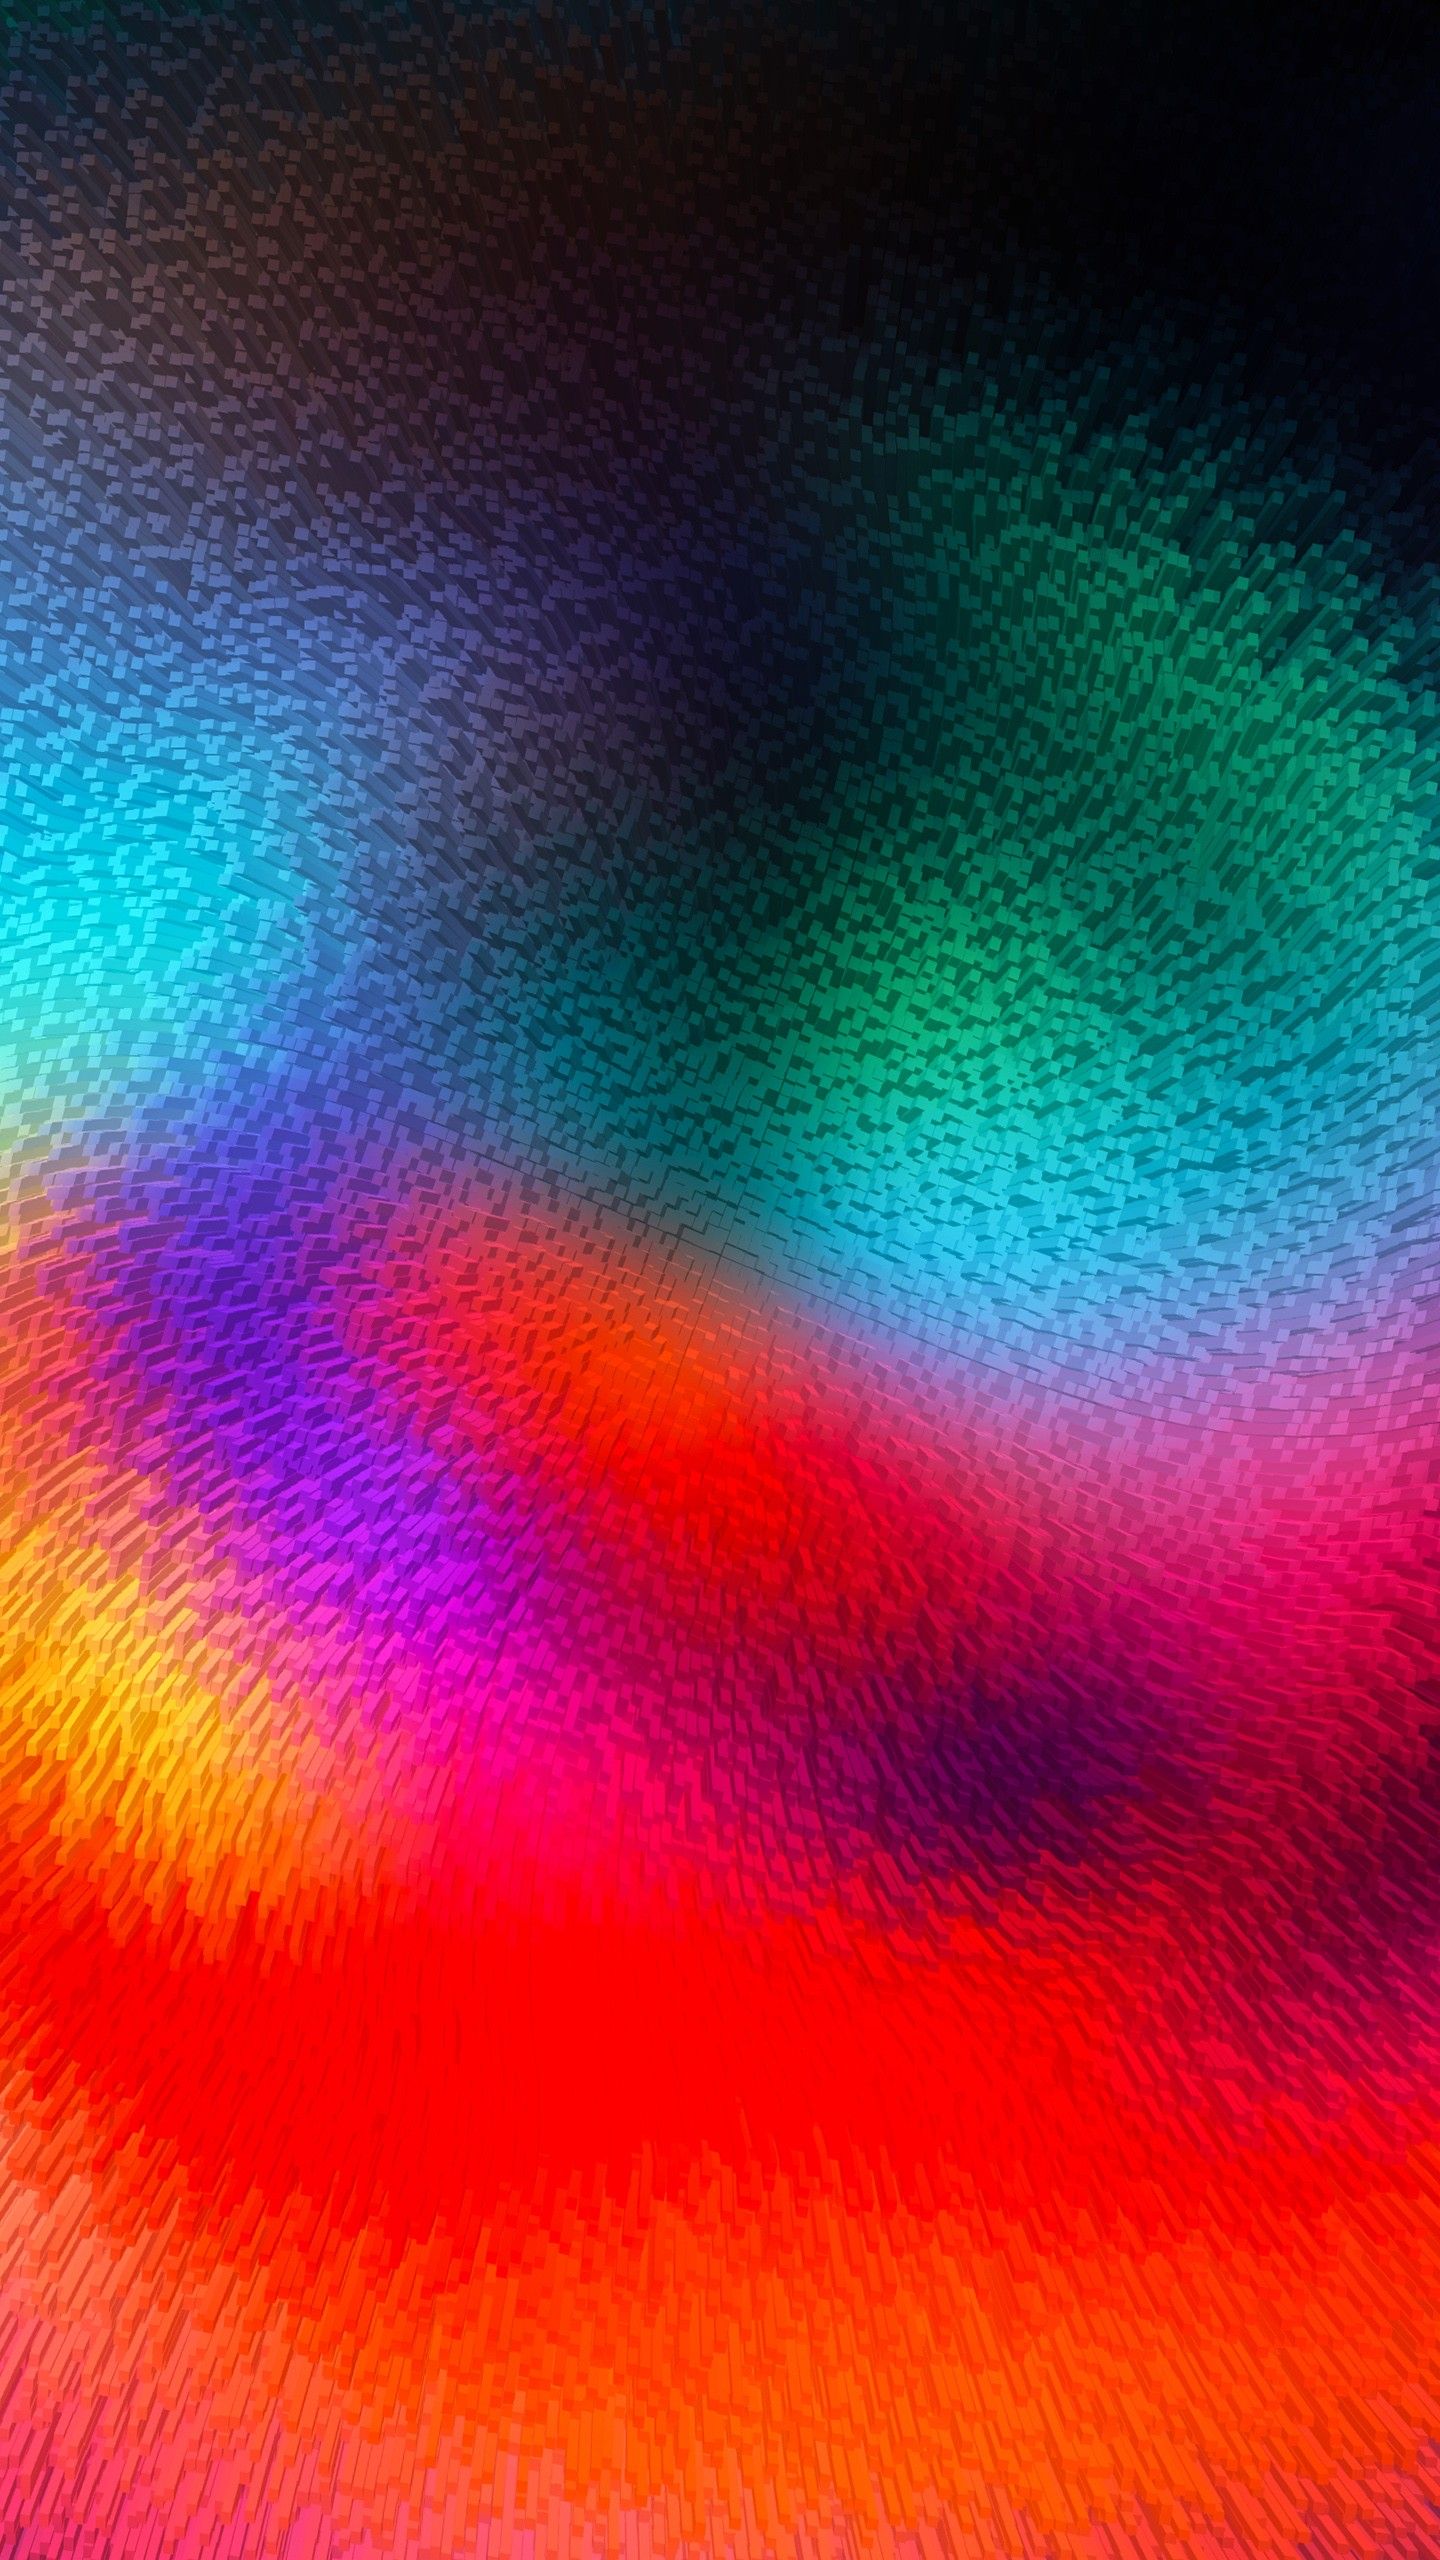 Abstract Spiral Brainwaves 5k Wallpaper HD 4k Background For